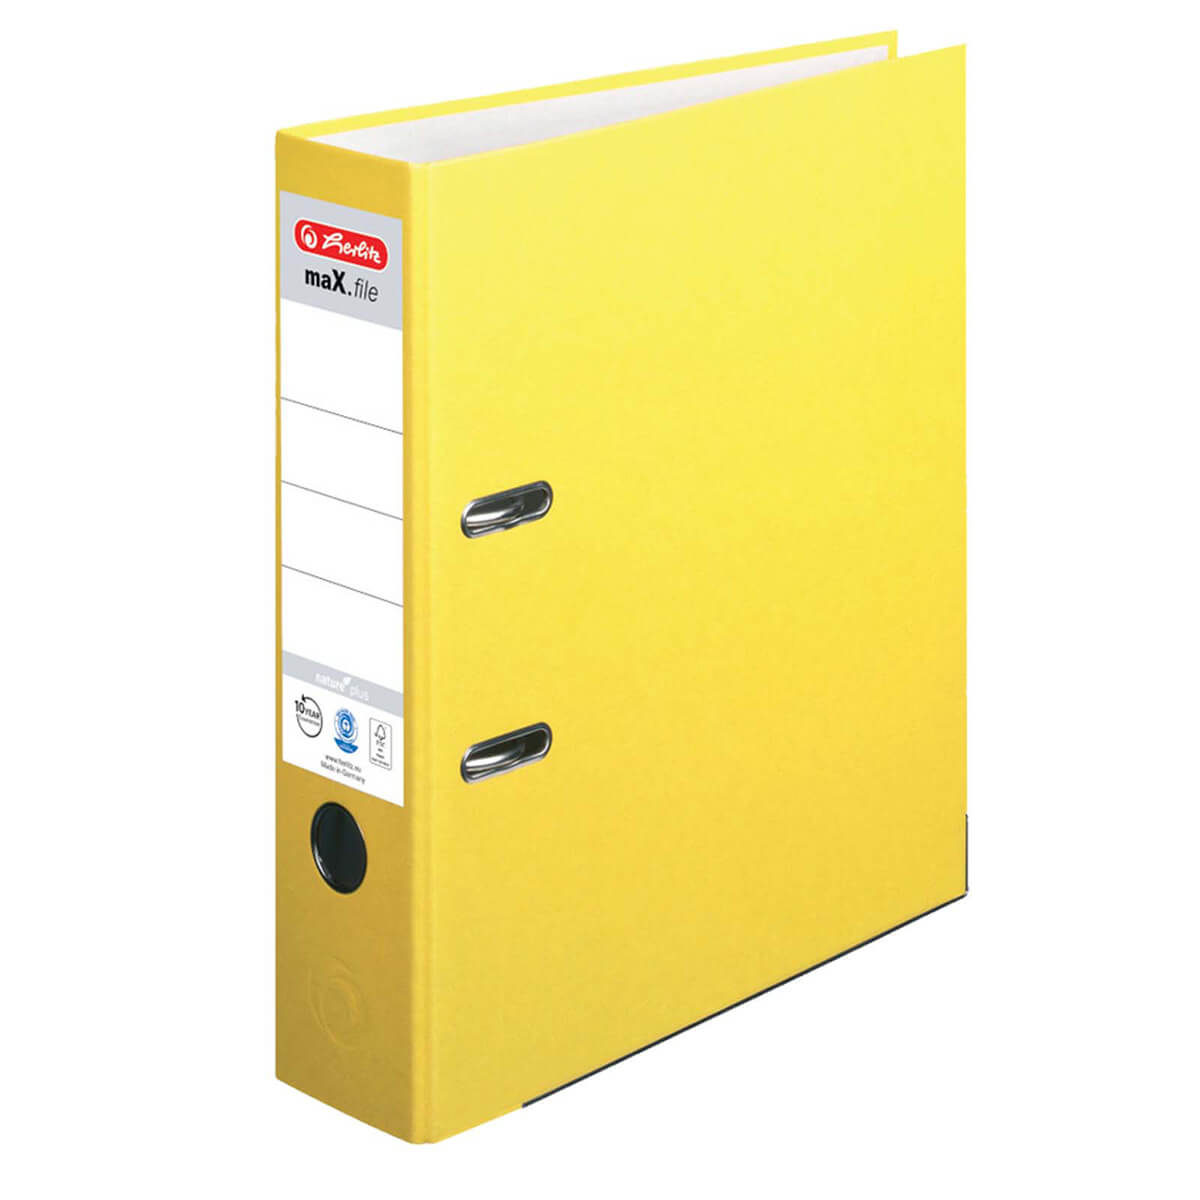 Herlitz Folder maX.file nature+ a4 8cm kraft paper cover sk spine label yellow